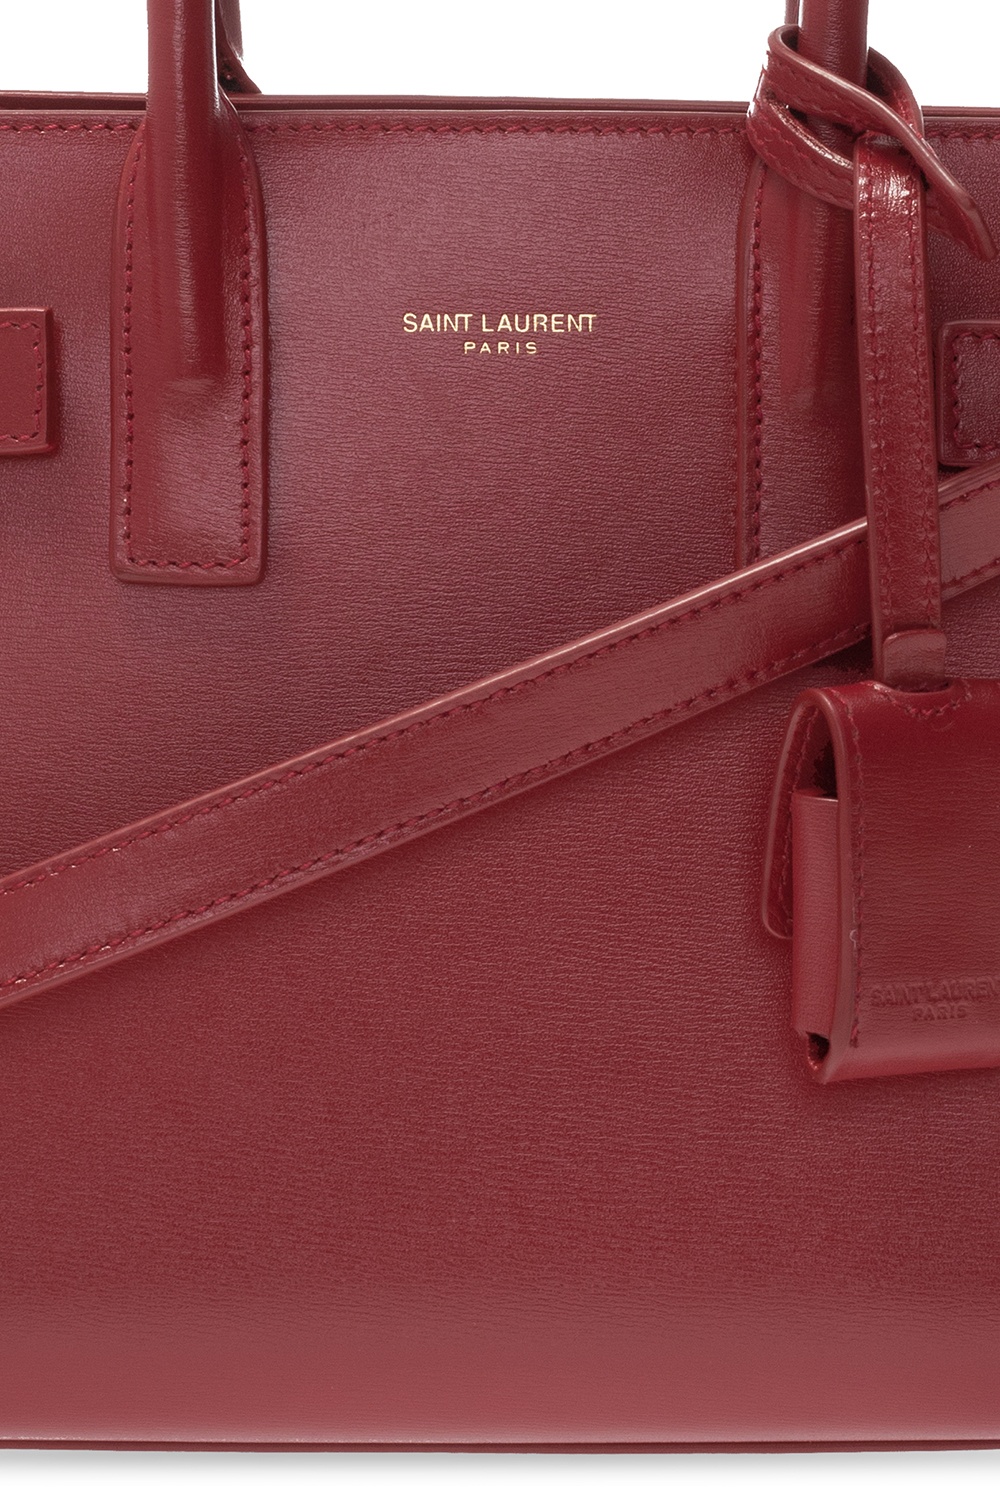 Saint Laurent Sac de Jour Gold Hardware Shoulder Bag Nano Black Leather